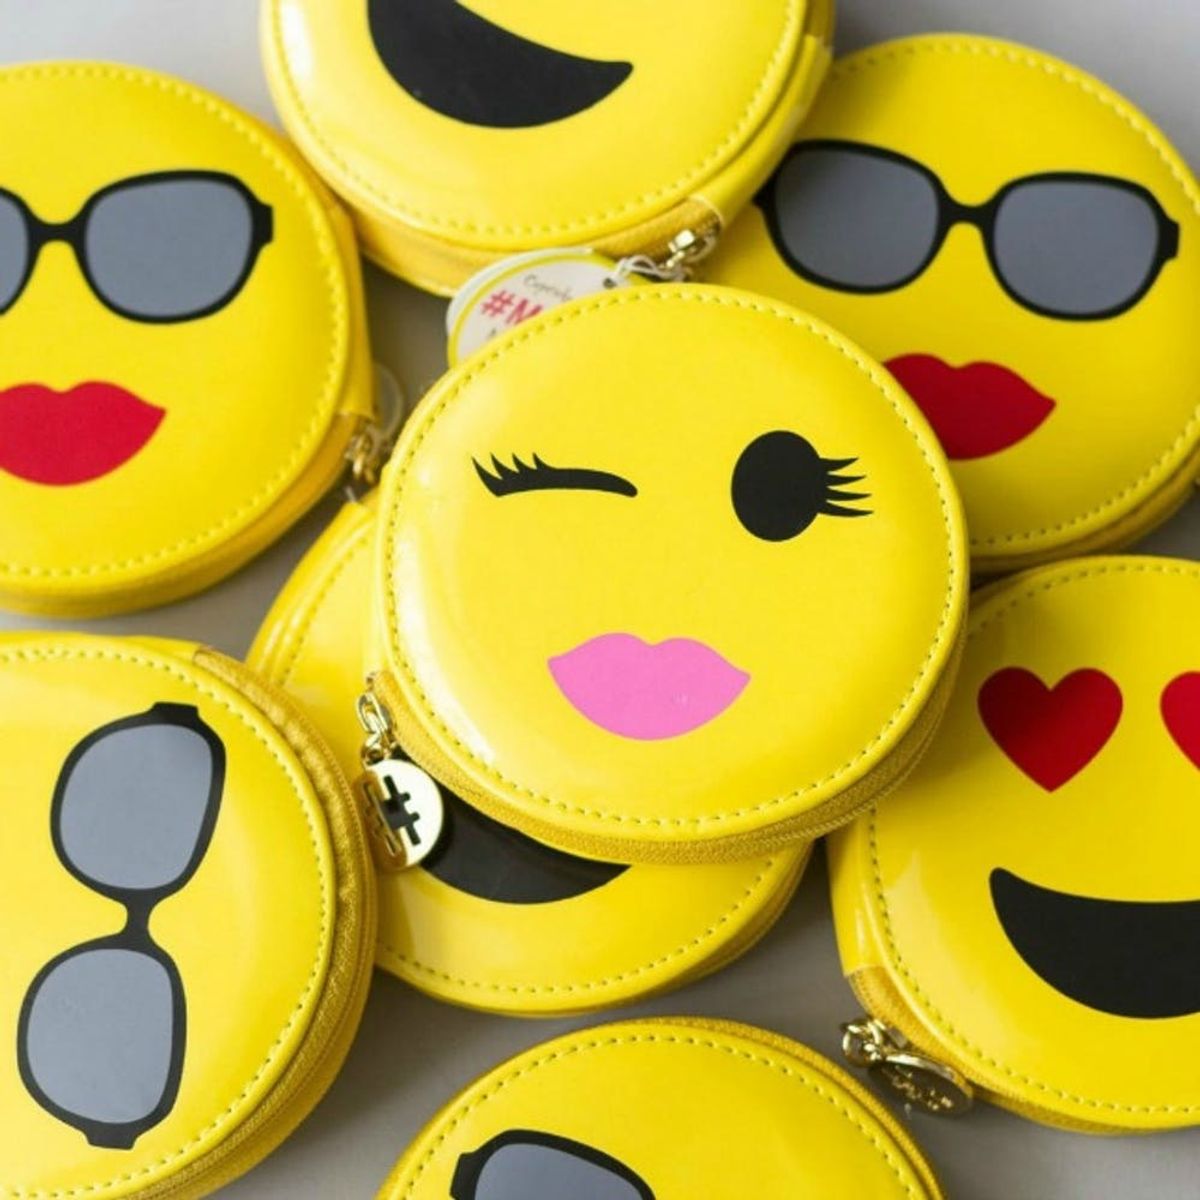 12 IRL Emoji Products to Celebrate World Emoji Day